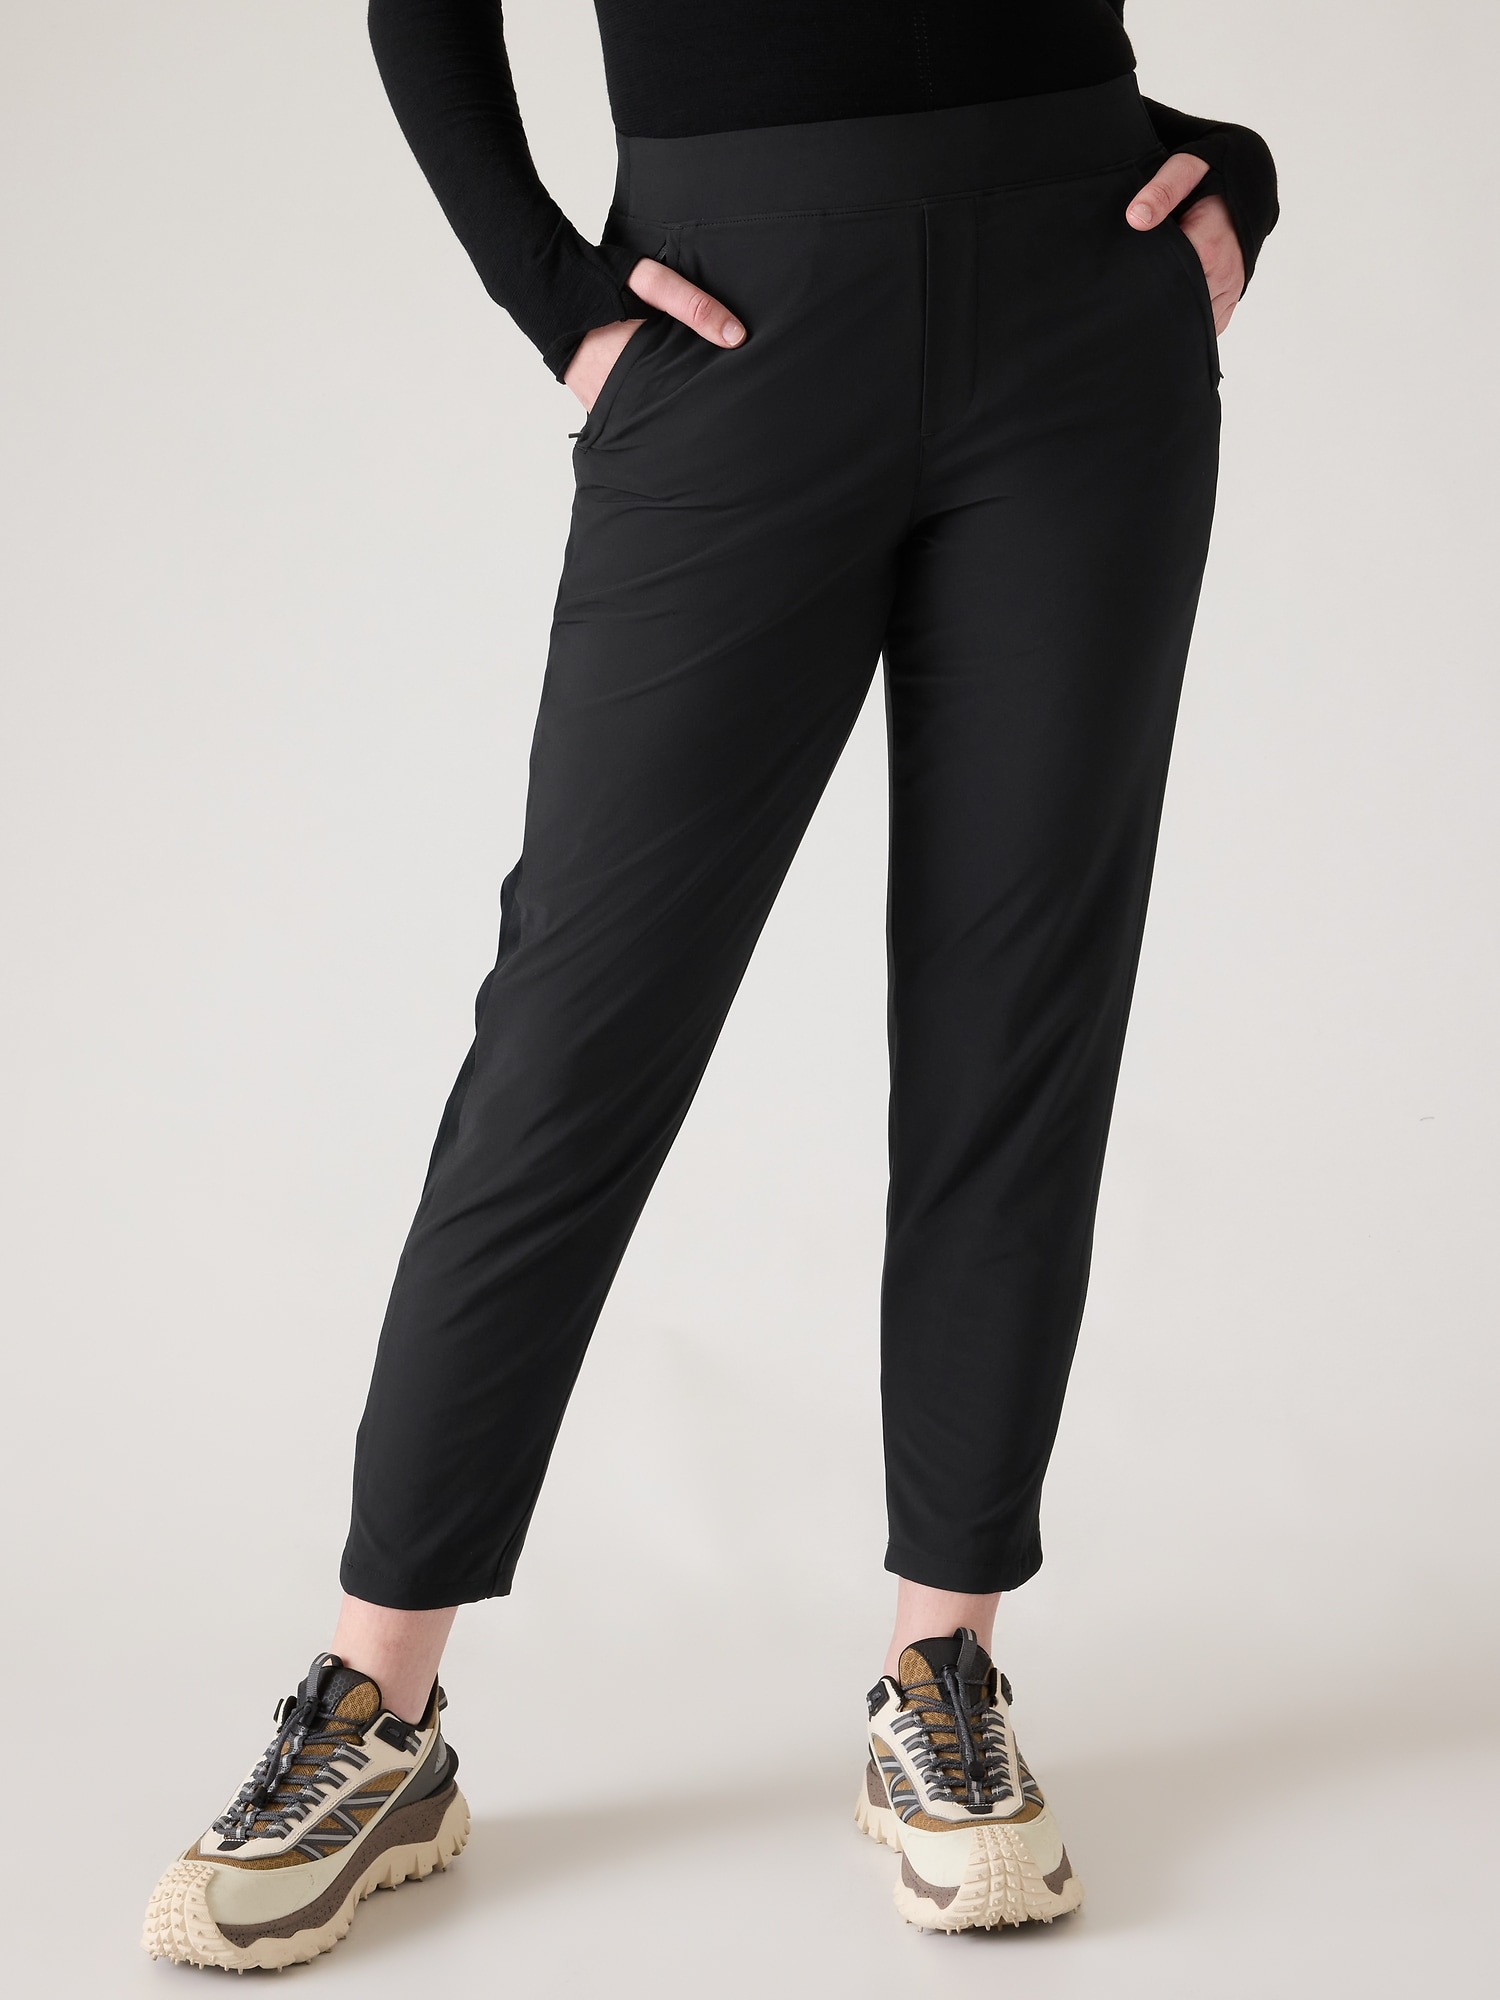 Banana Republic Womens Dress Pants Capris Trousers Black Size 10 Lot 2 -  Shop Linda's Stuff